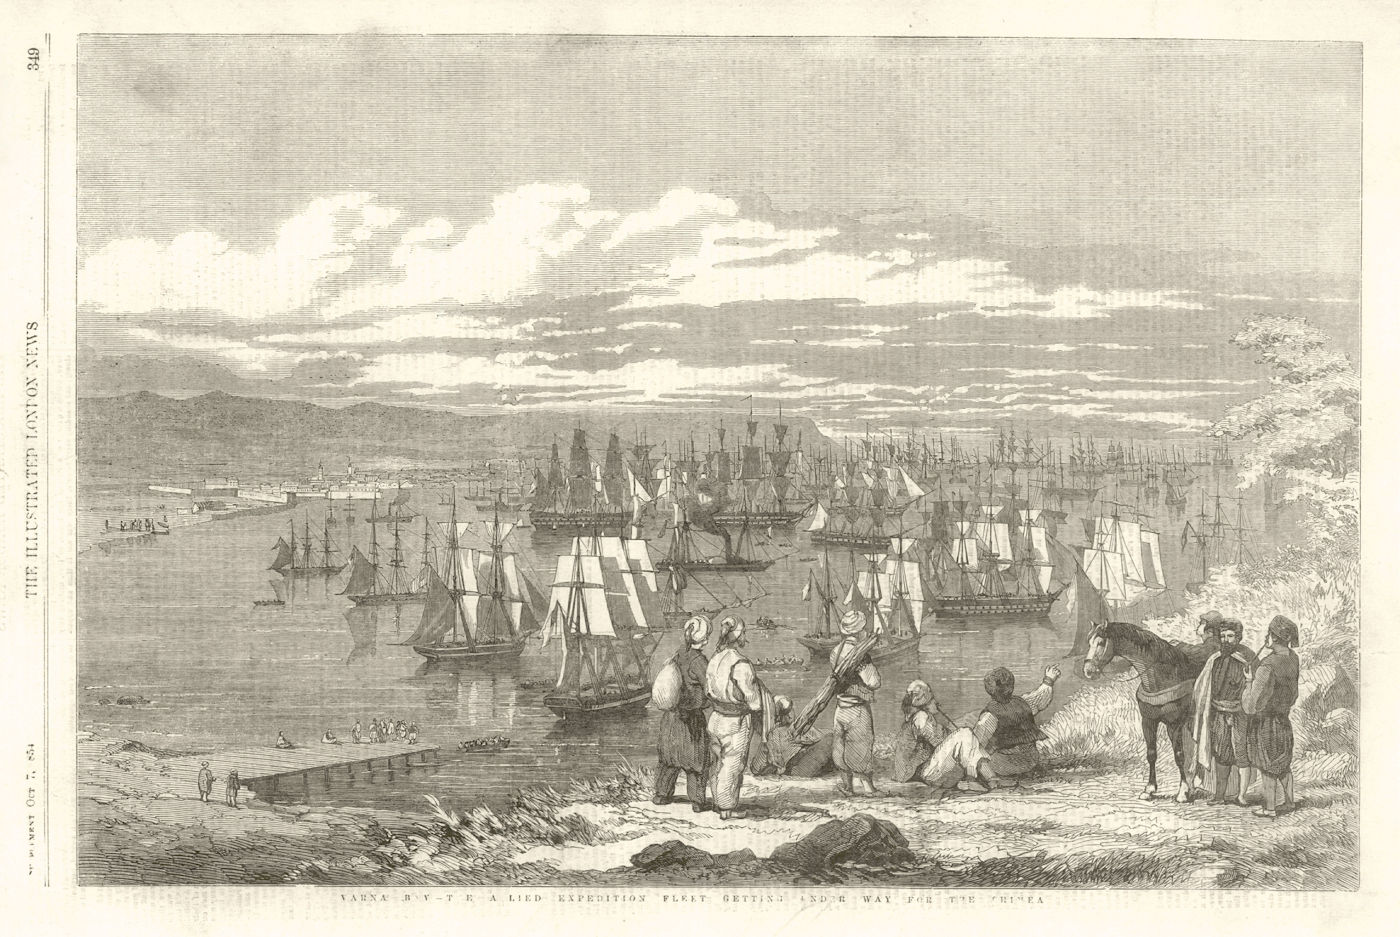 Varna Bay. Allied Expedition Fleet setting sail. Bulgaria. Crimean War 1854